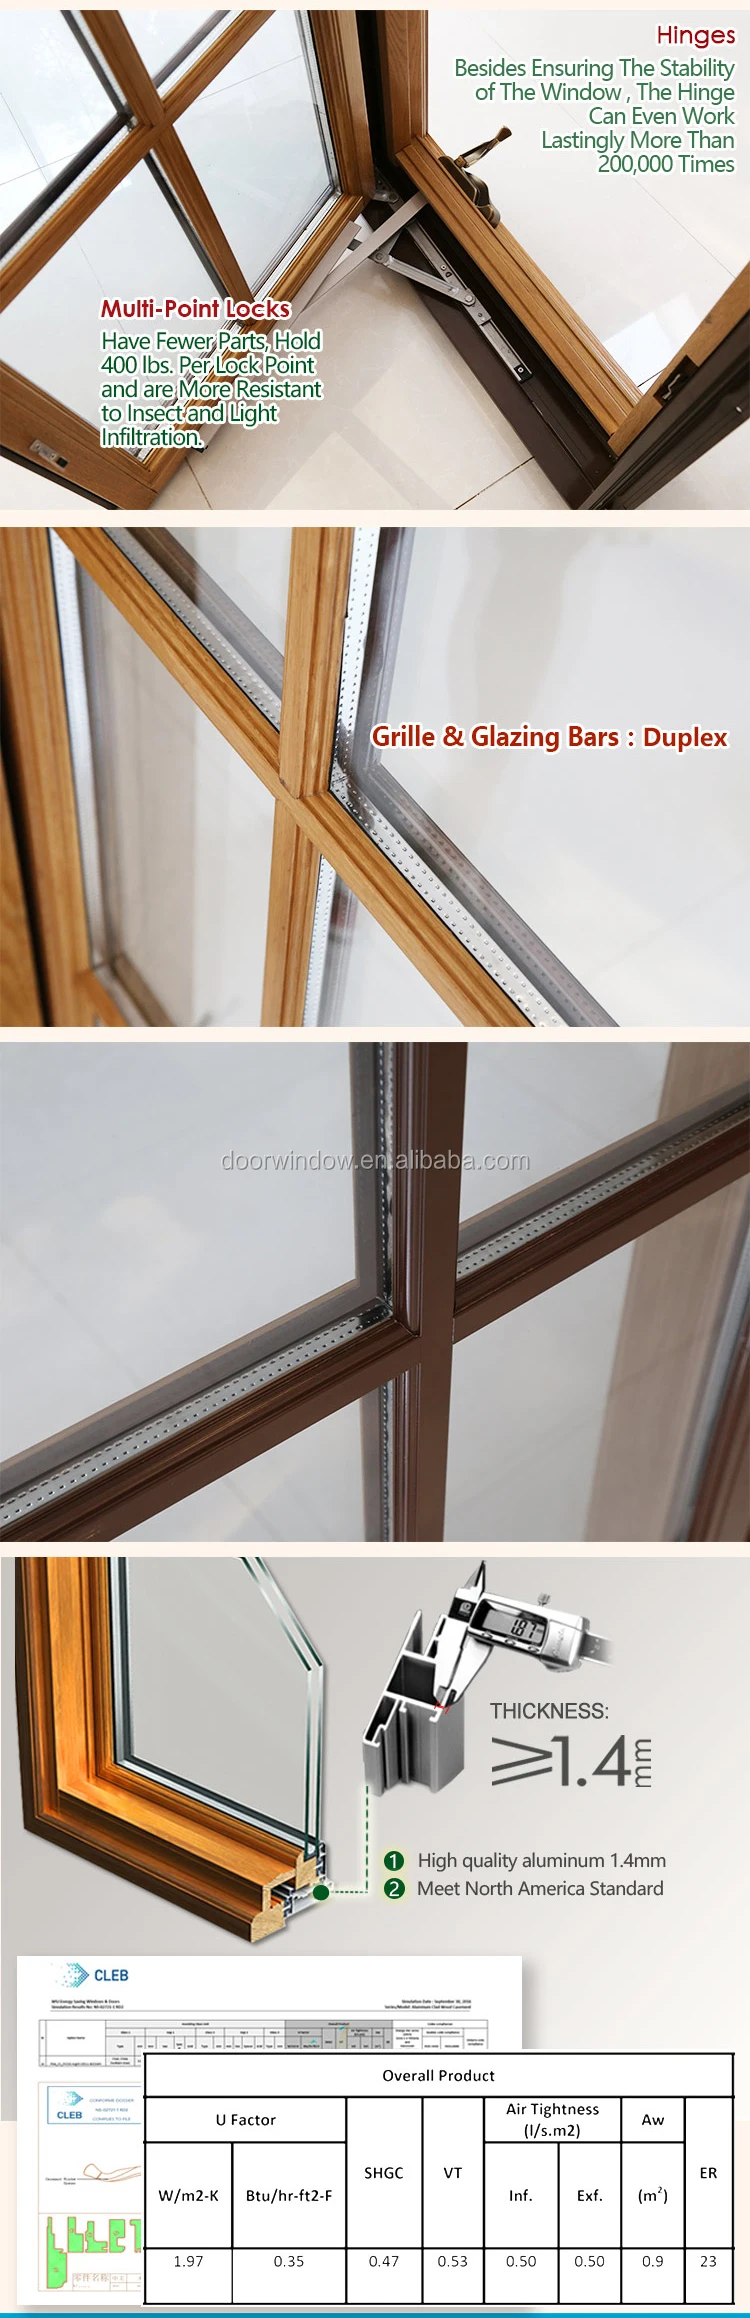 energy swing windows & doors united states wood window profiles crank handle swing out casement windows